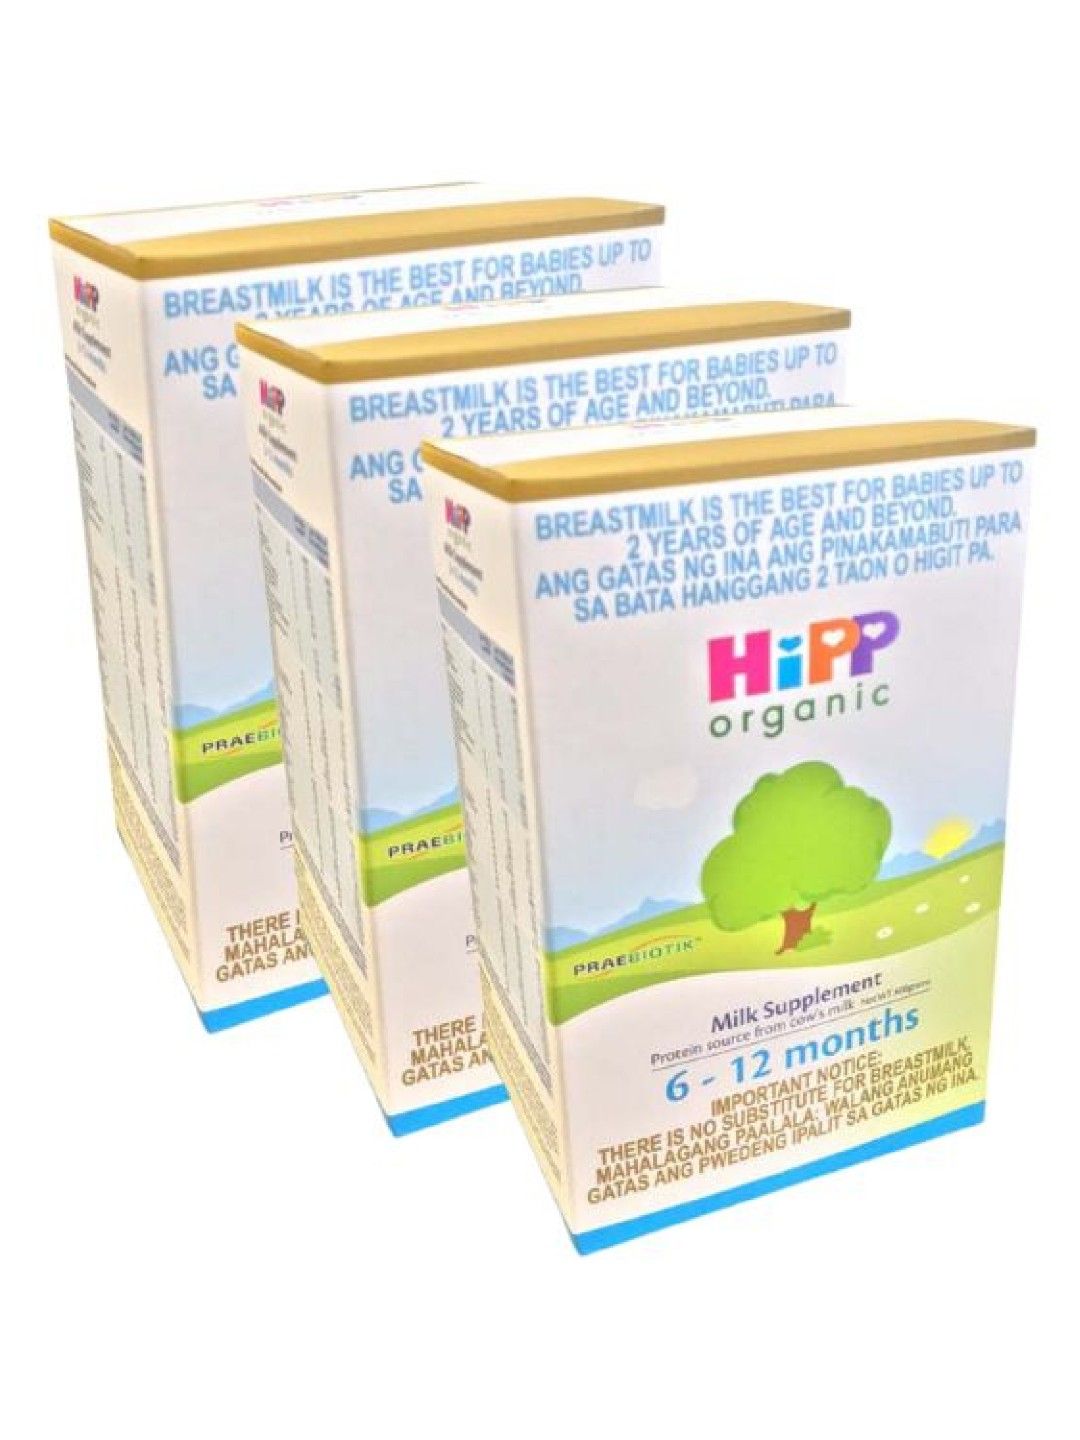 HiPP Organic Bag-in-Boxes Milk Supplement 6-12 Months (400g) Bundle of 3